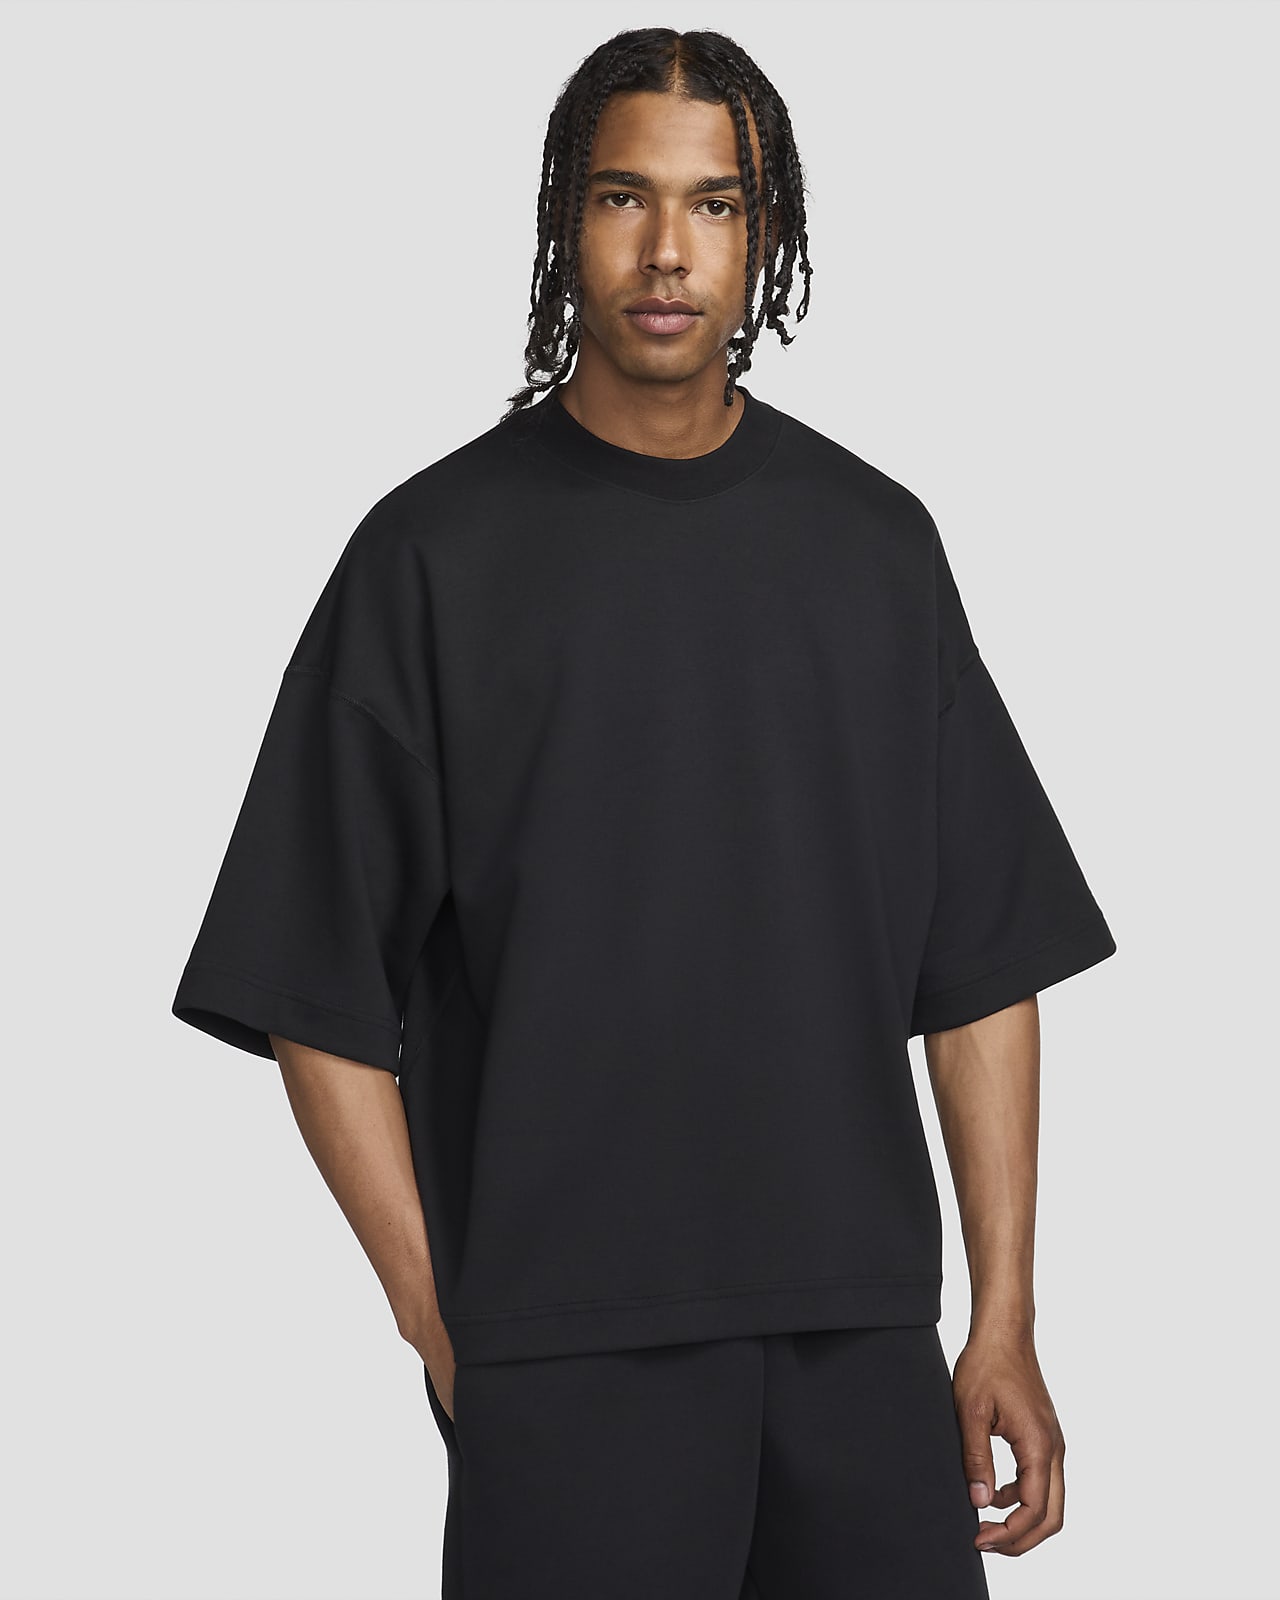 Nike Tech Men's Short-Sleeve Fleece Top